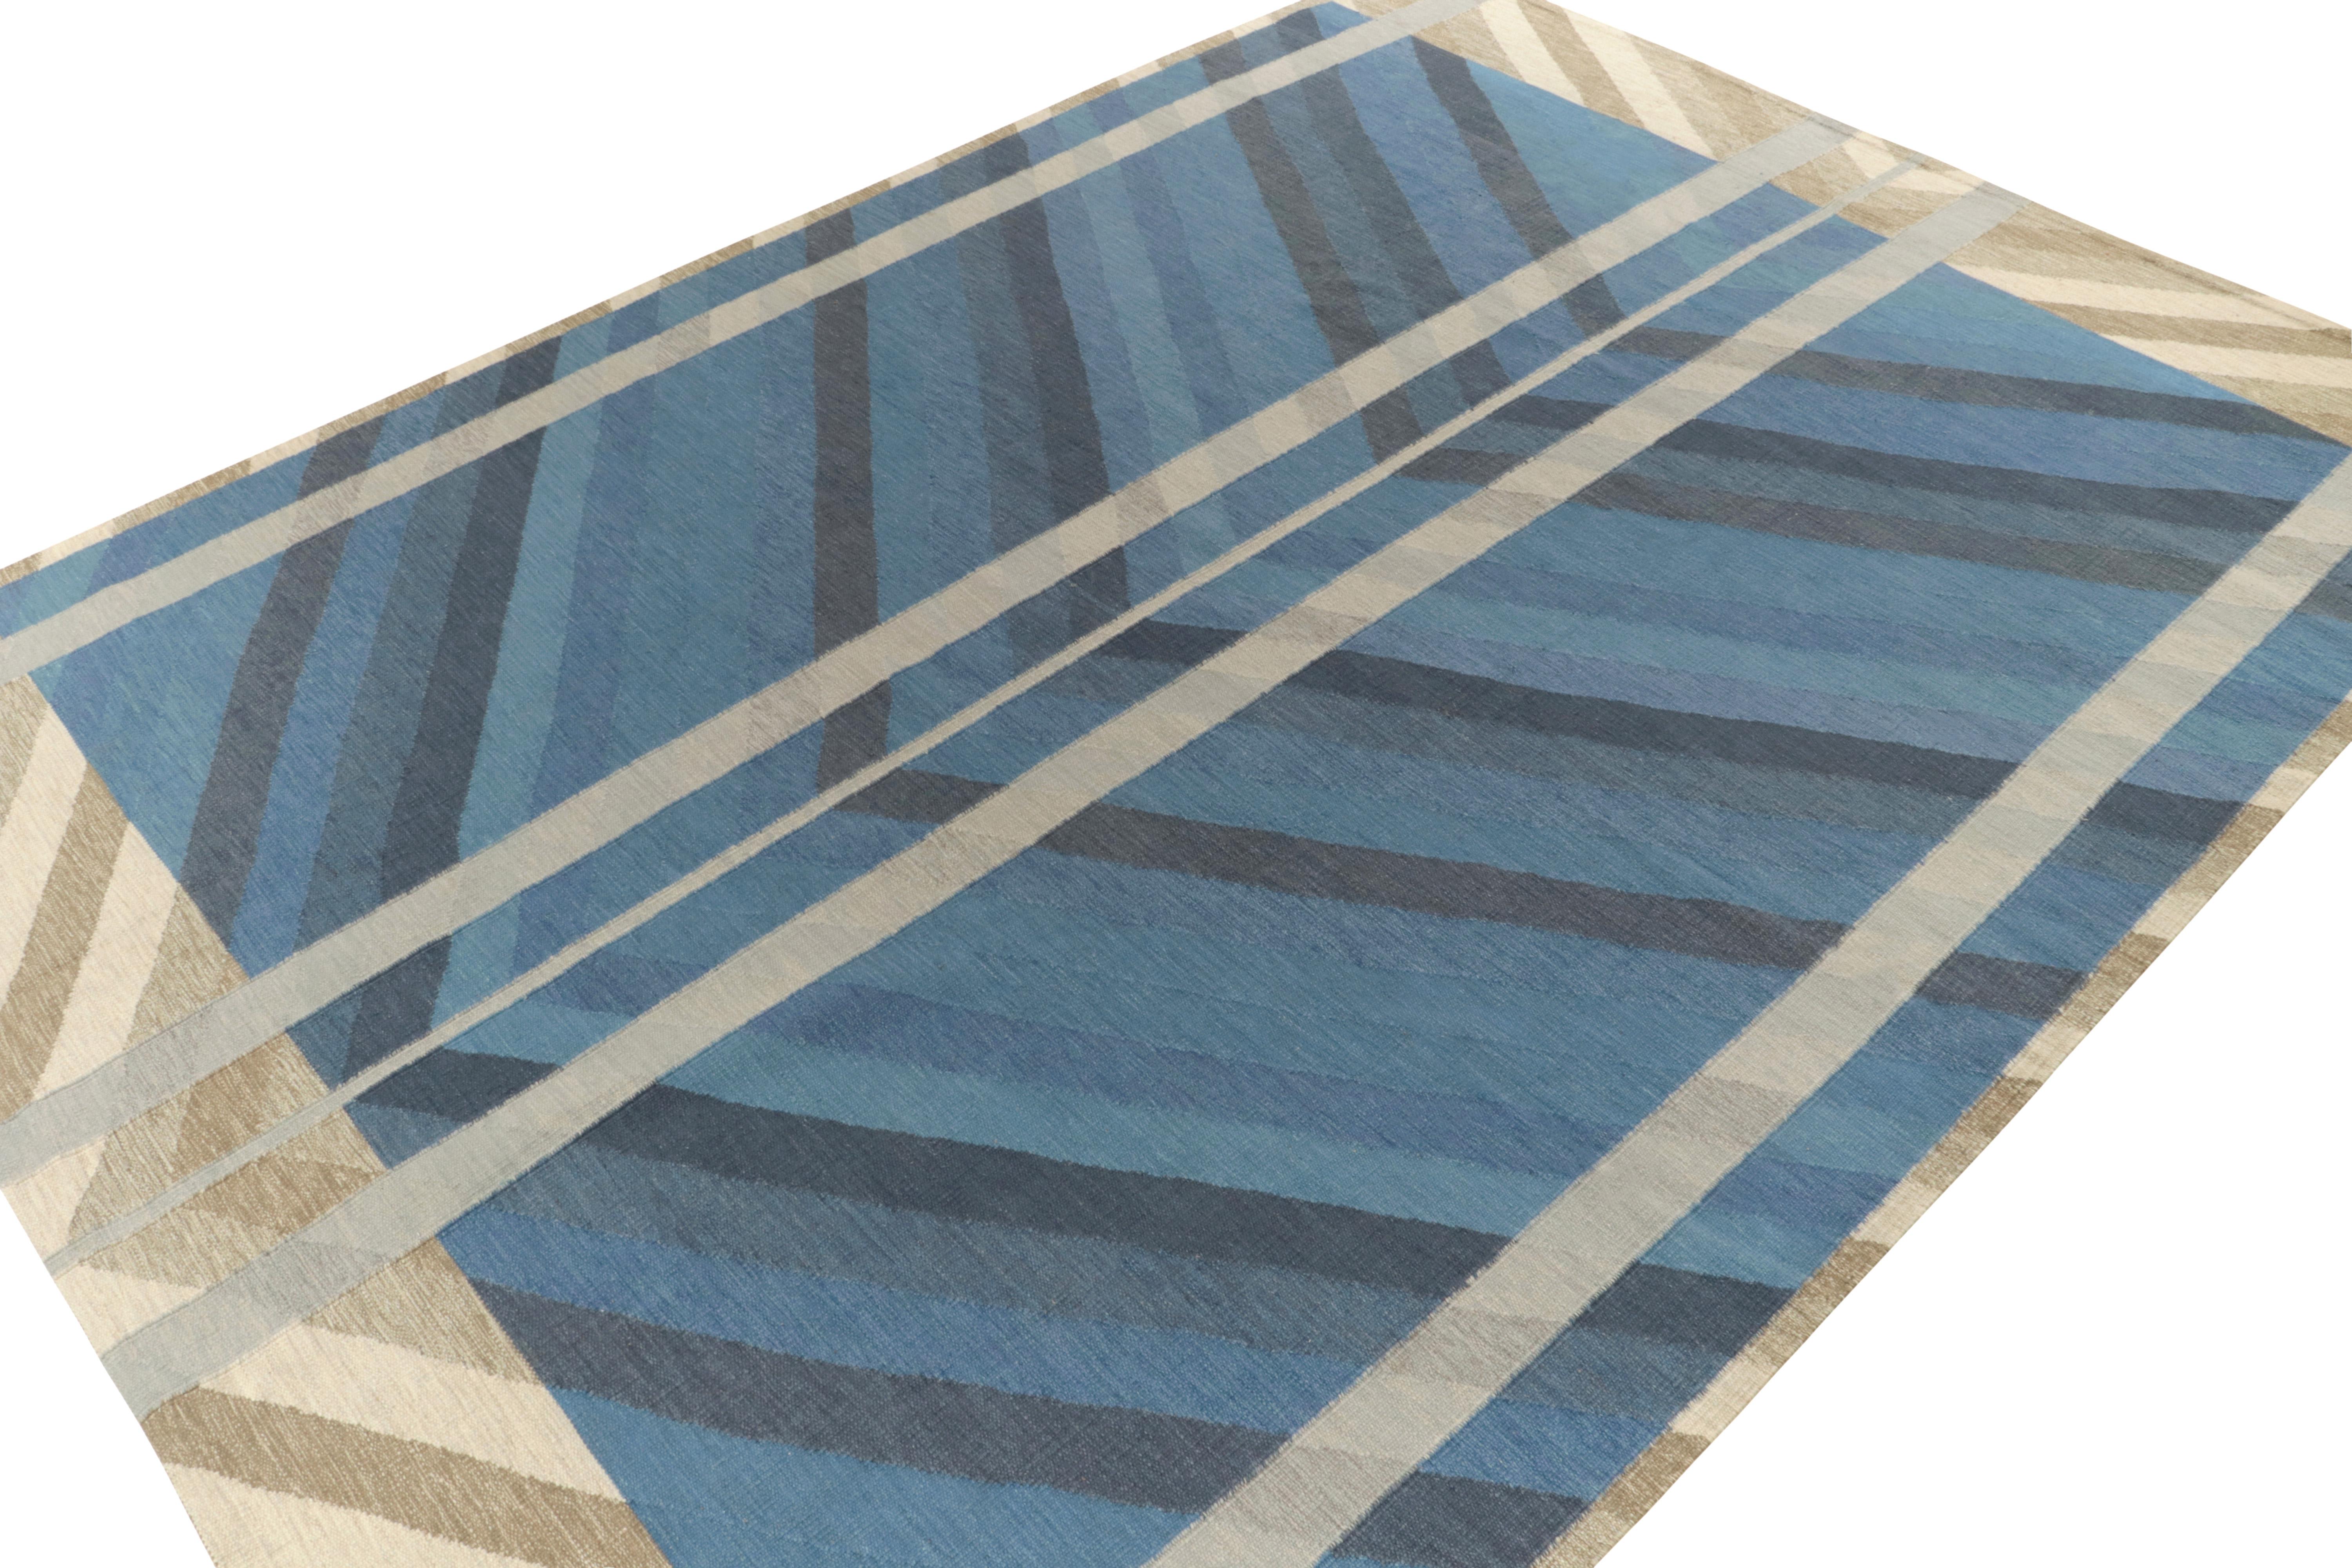 Indian Rug & Kilim's Scandinavian Style Kilim Rug in Blue, Beige-Gray Chevron Pattern For Sale